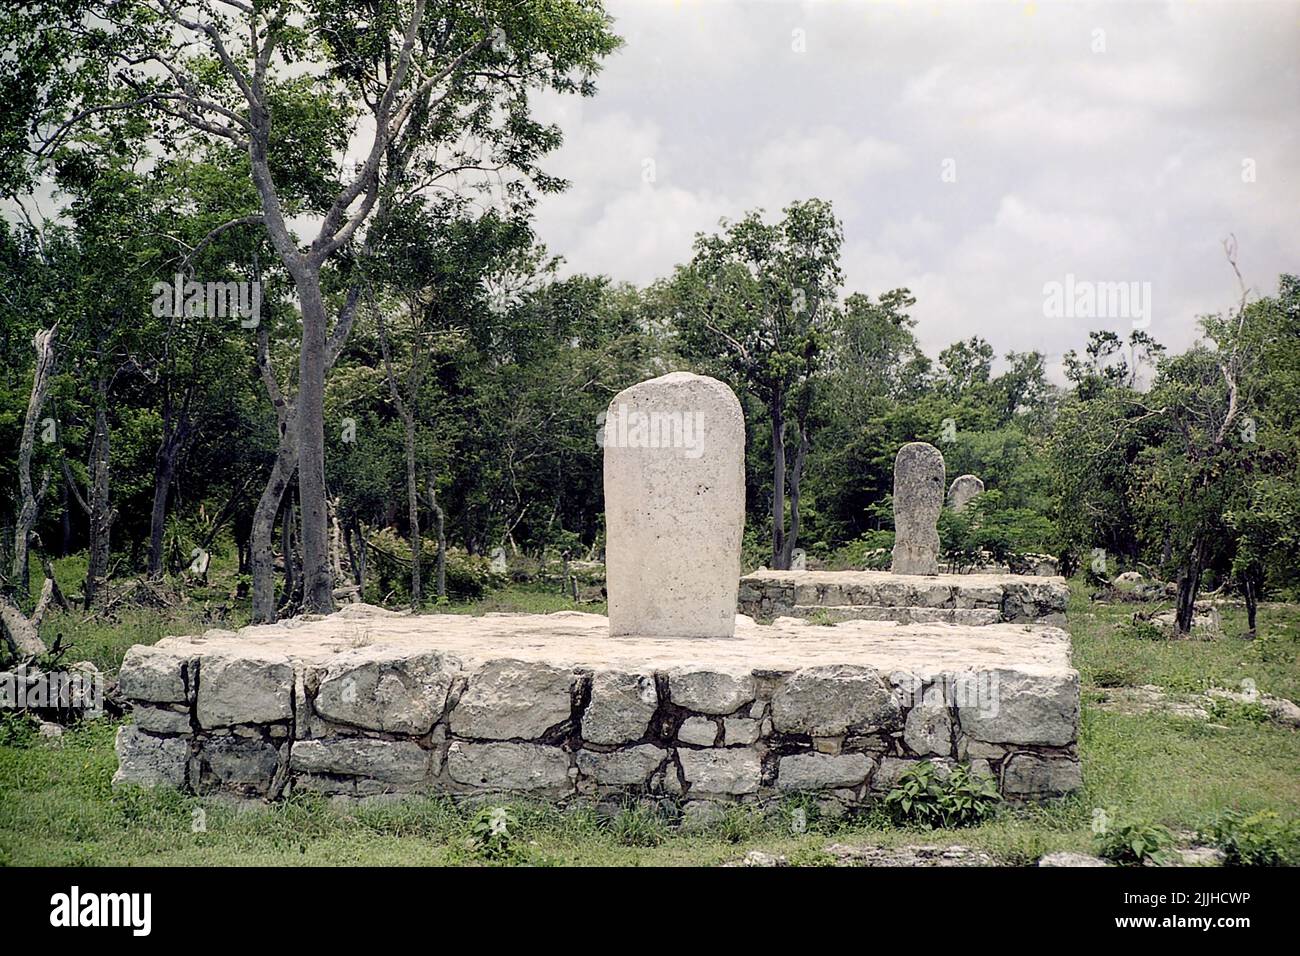 Stelae Plaza in Dzibilchaltun Mayan ruins, north of Merida, Yucatan, Mexico. Stock Photo